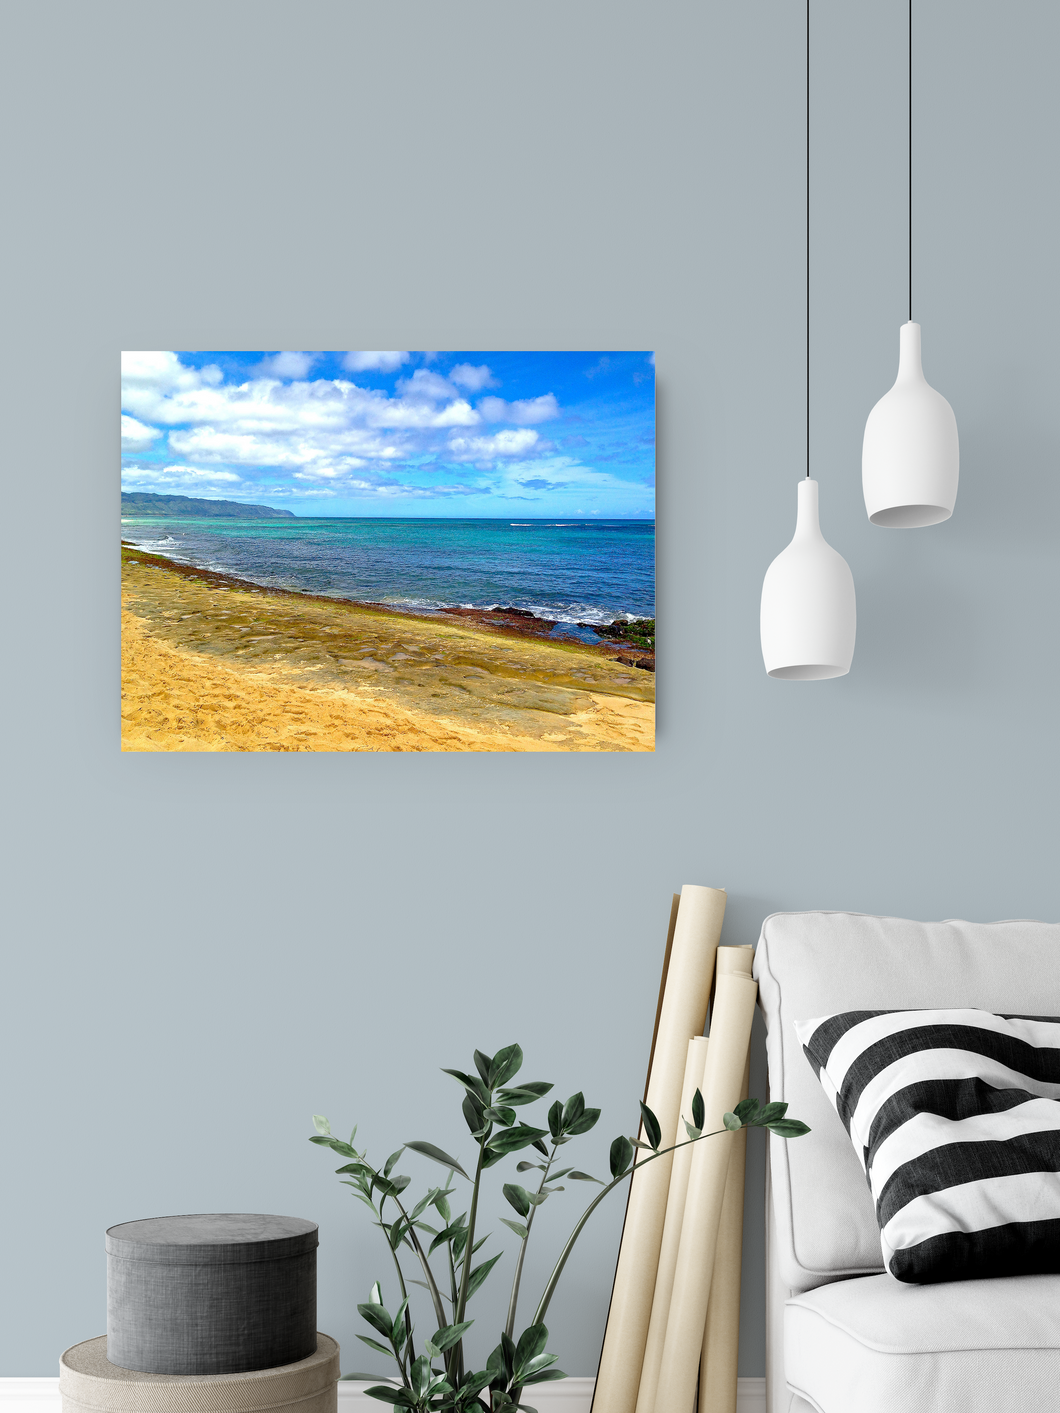 Beachscape, Sand, Ocean, Blue Sky, Puffy White Clouds, North Shore, Oahu, Hawaii, Metal Art Print, Interior Room, Image